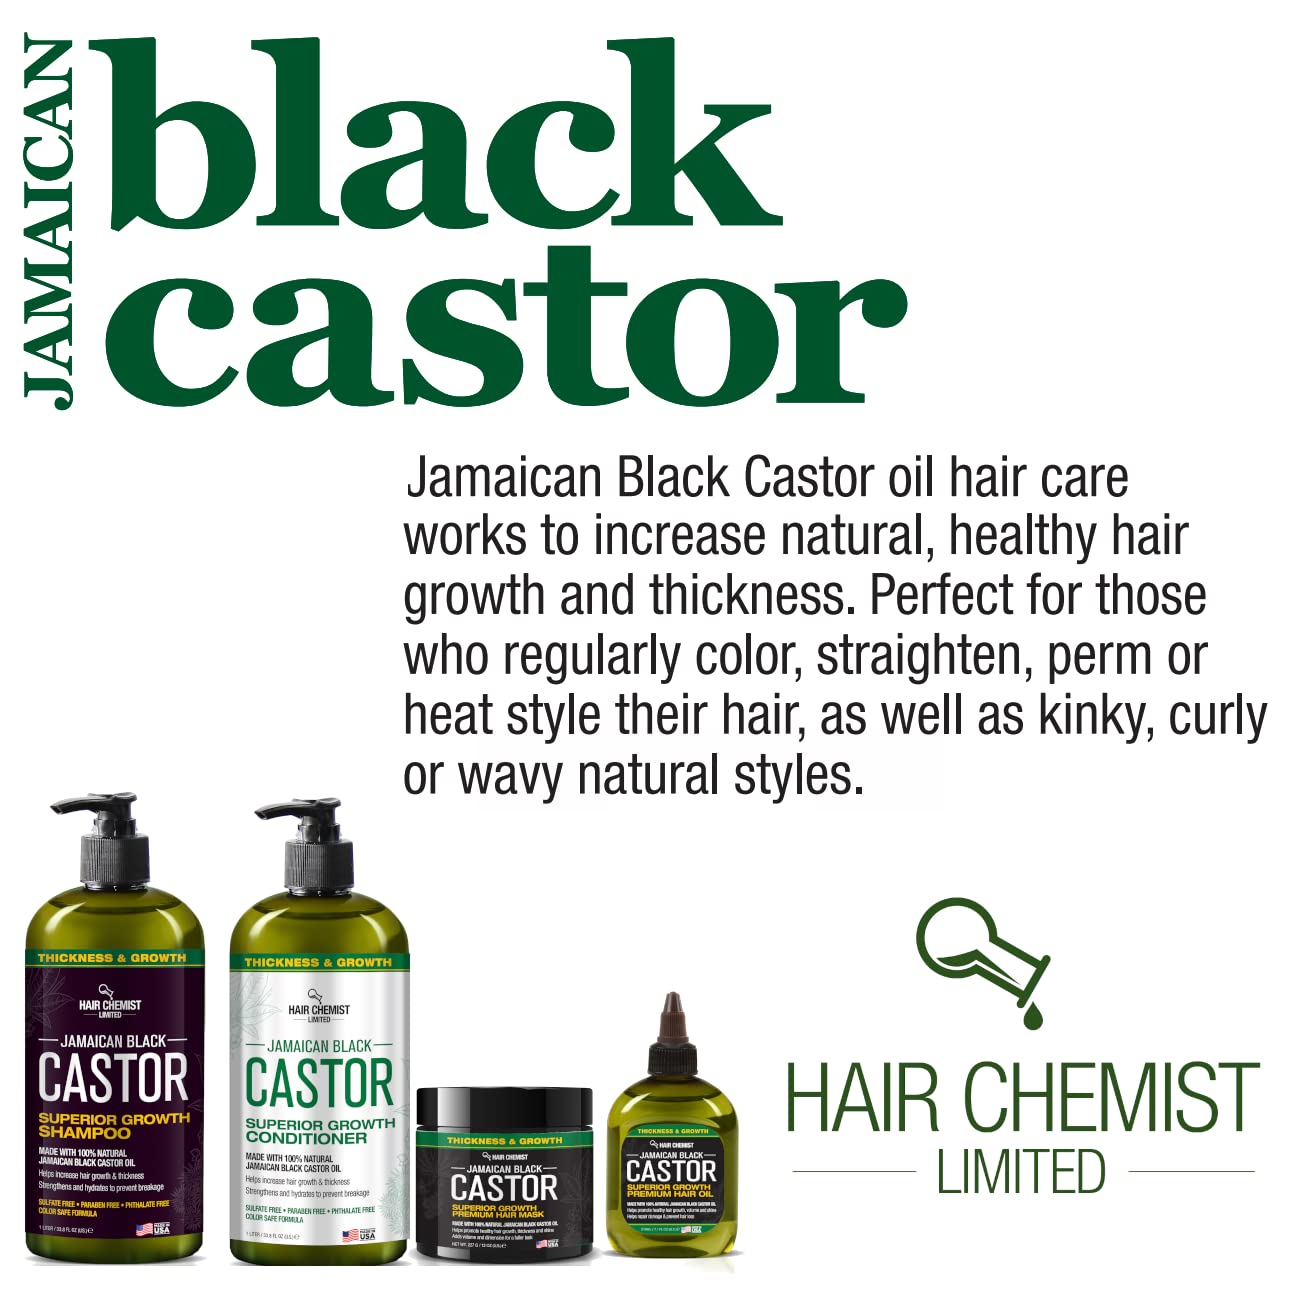 Hair Chemist Superior Growth Jamaican Black Castor Shampoo 33.8oz & Conditioner 33.8oz - 2-PC Shampoo & Conditioner for Hair Growth